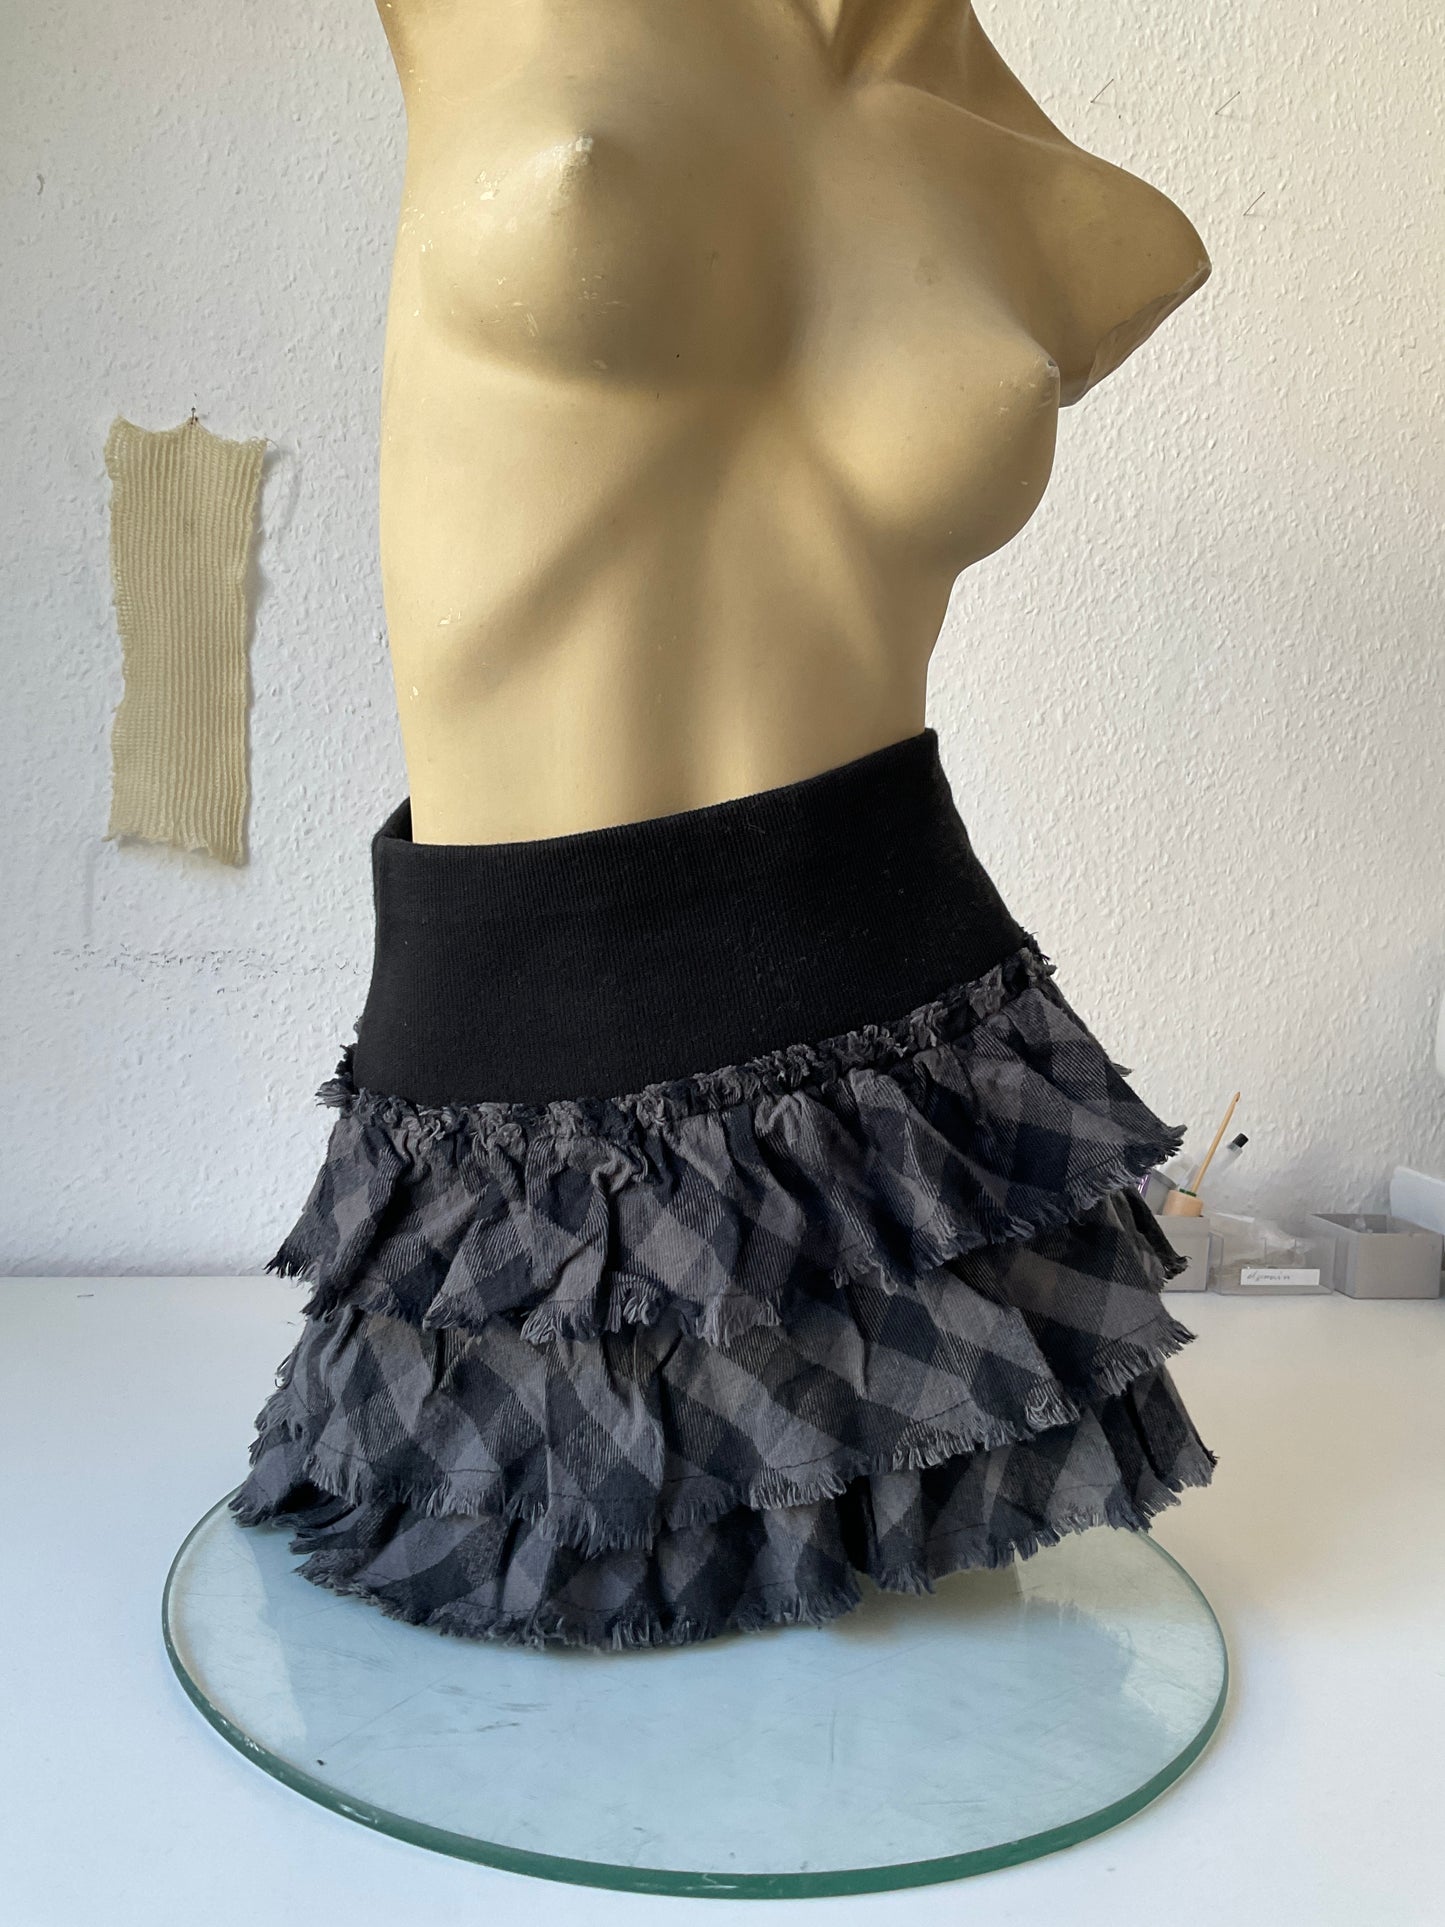 Flannel microskirt